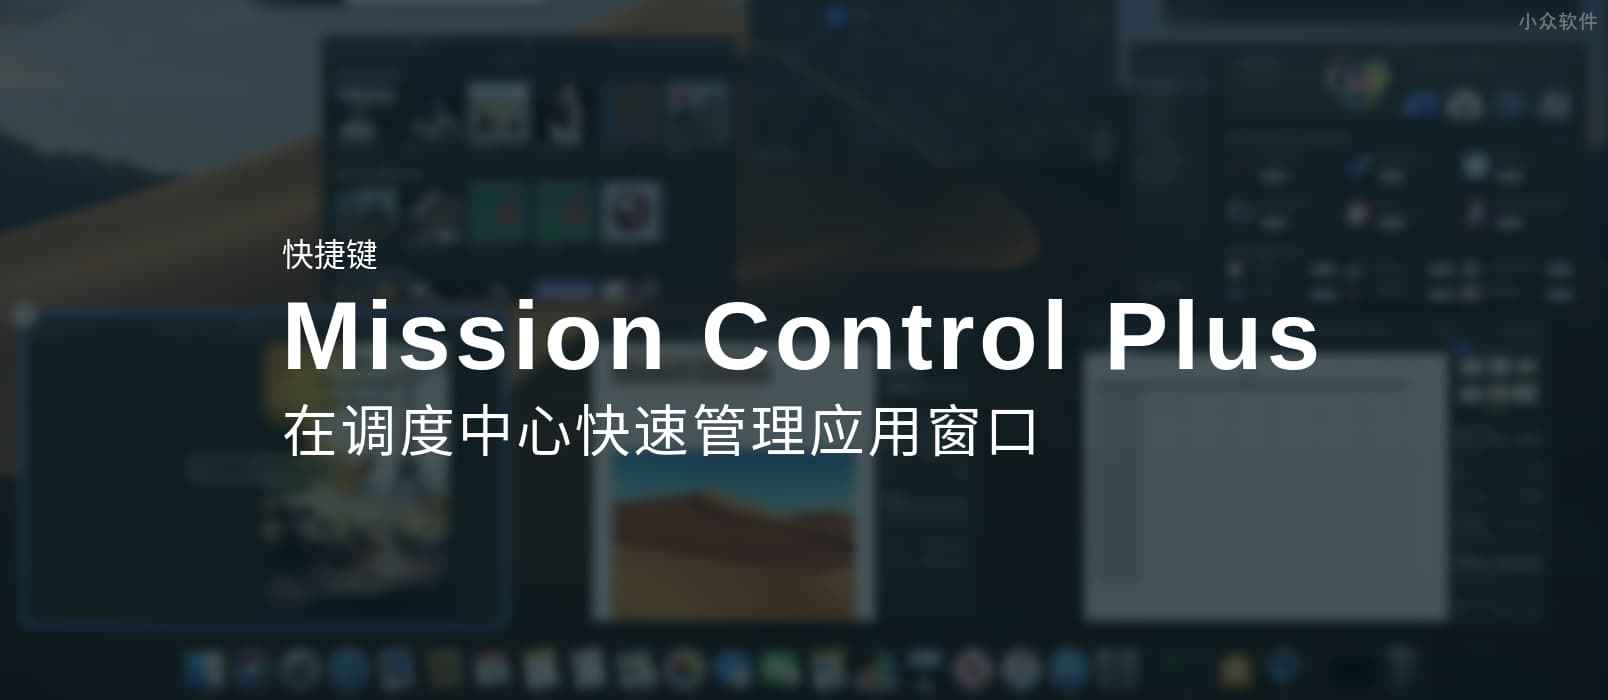 Mission Control Plus - 在 Mac 调度中心 Mission Control 管理应用，并添加快捷键 1